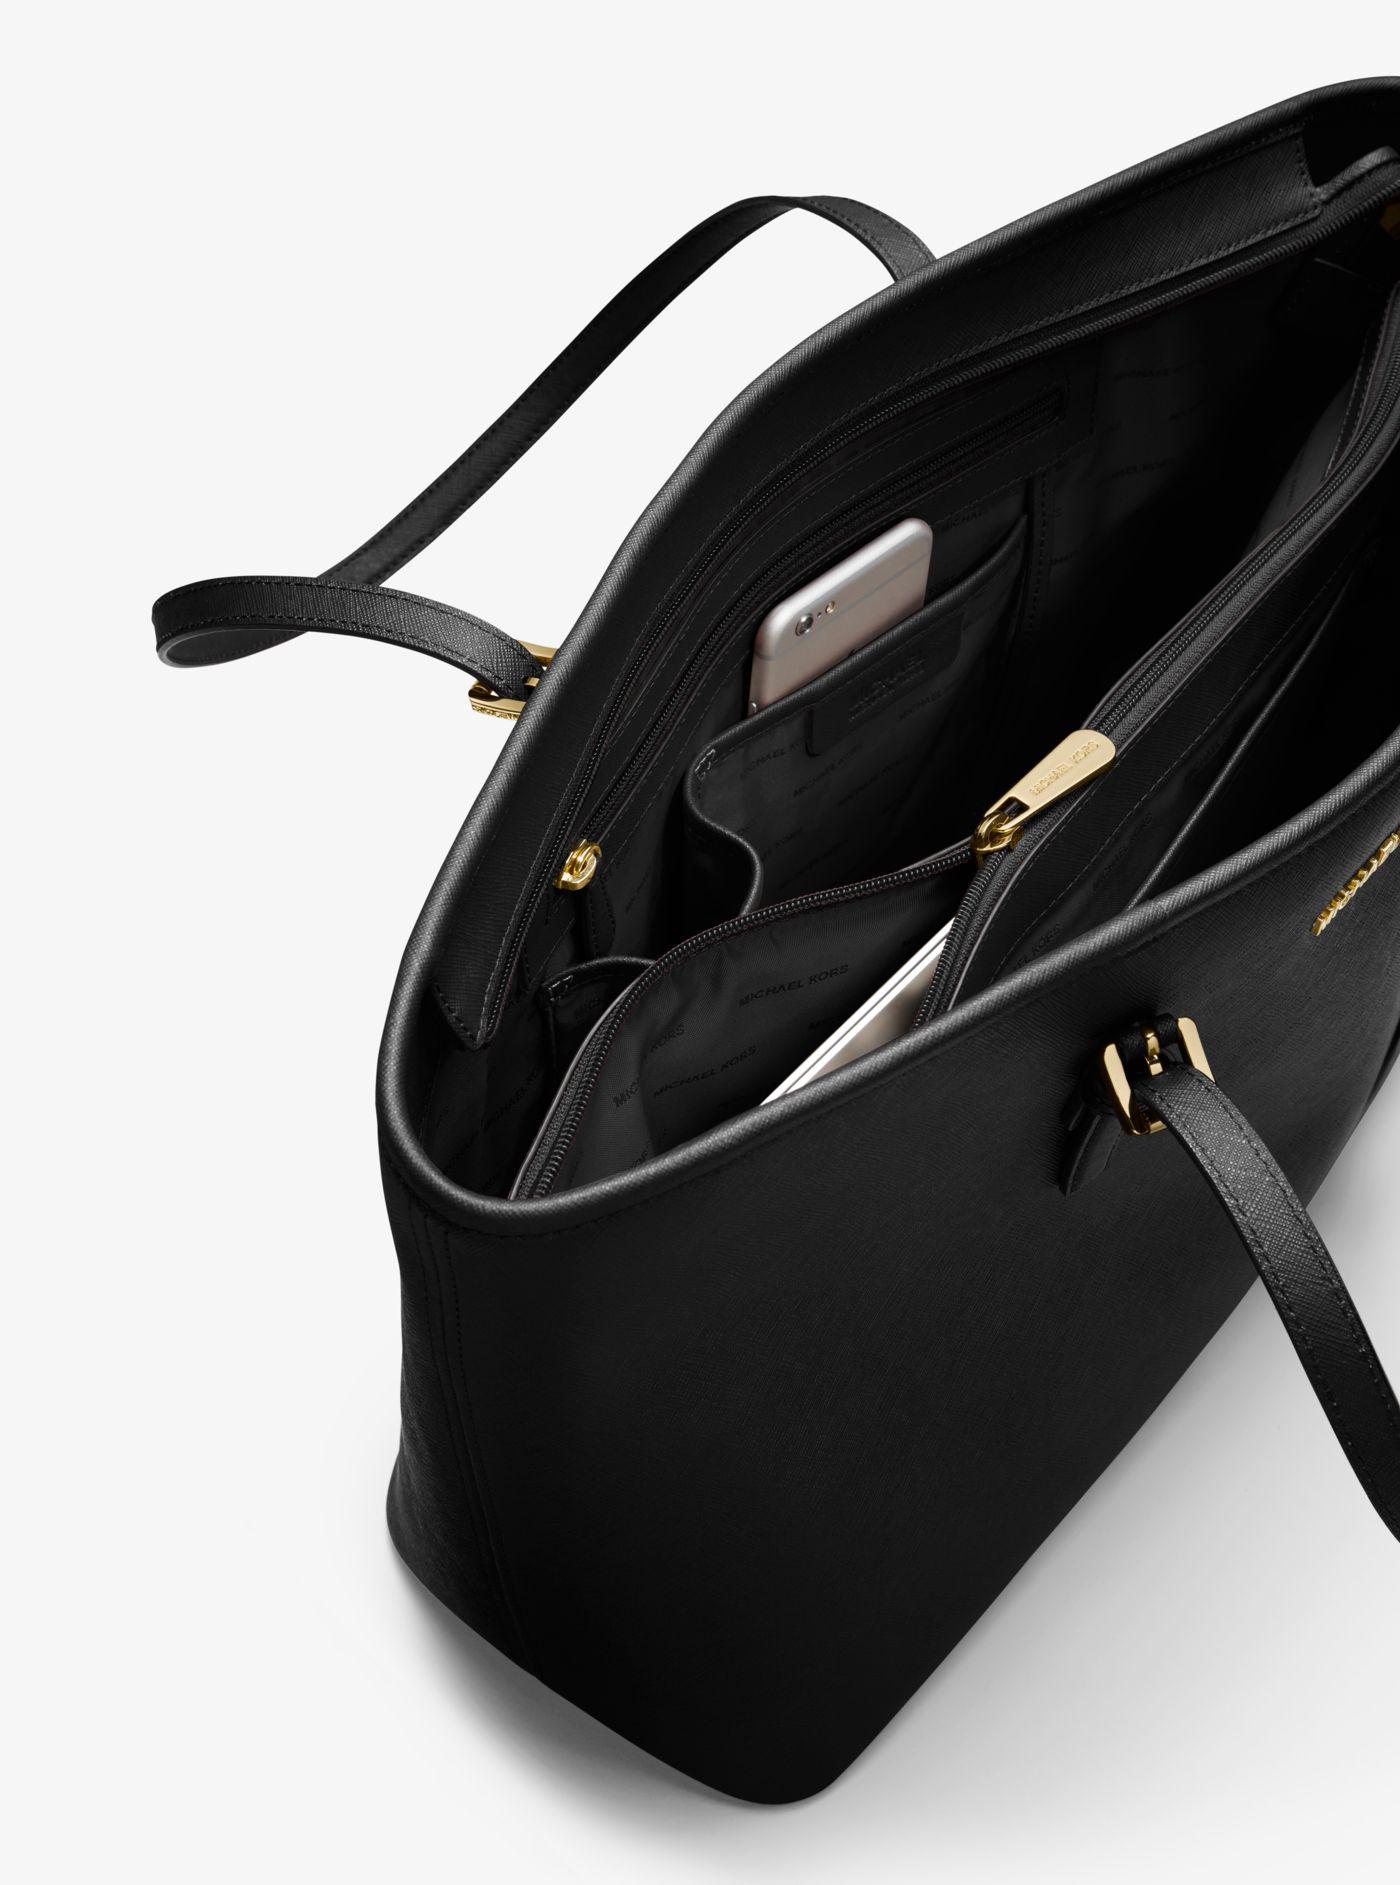 Michael Kors Jet Set Medium Saffiano Leather Top-zip Tote Bag in Black |  Lyst